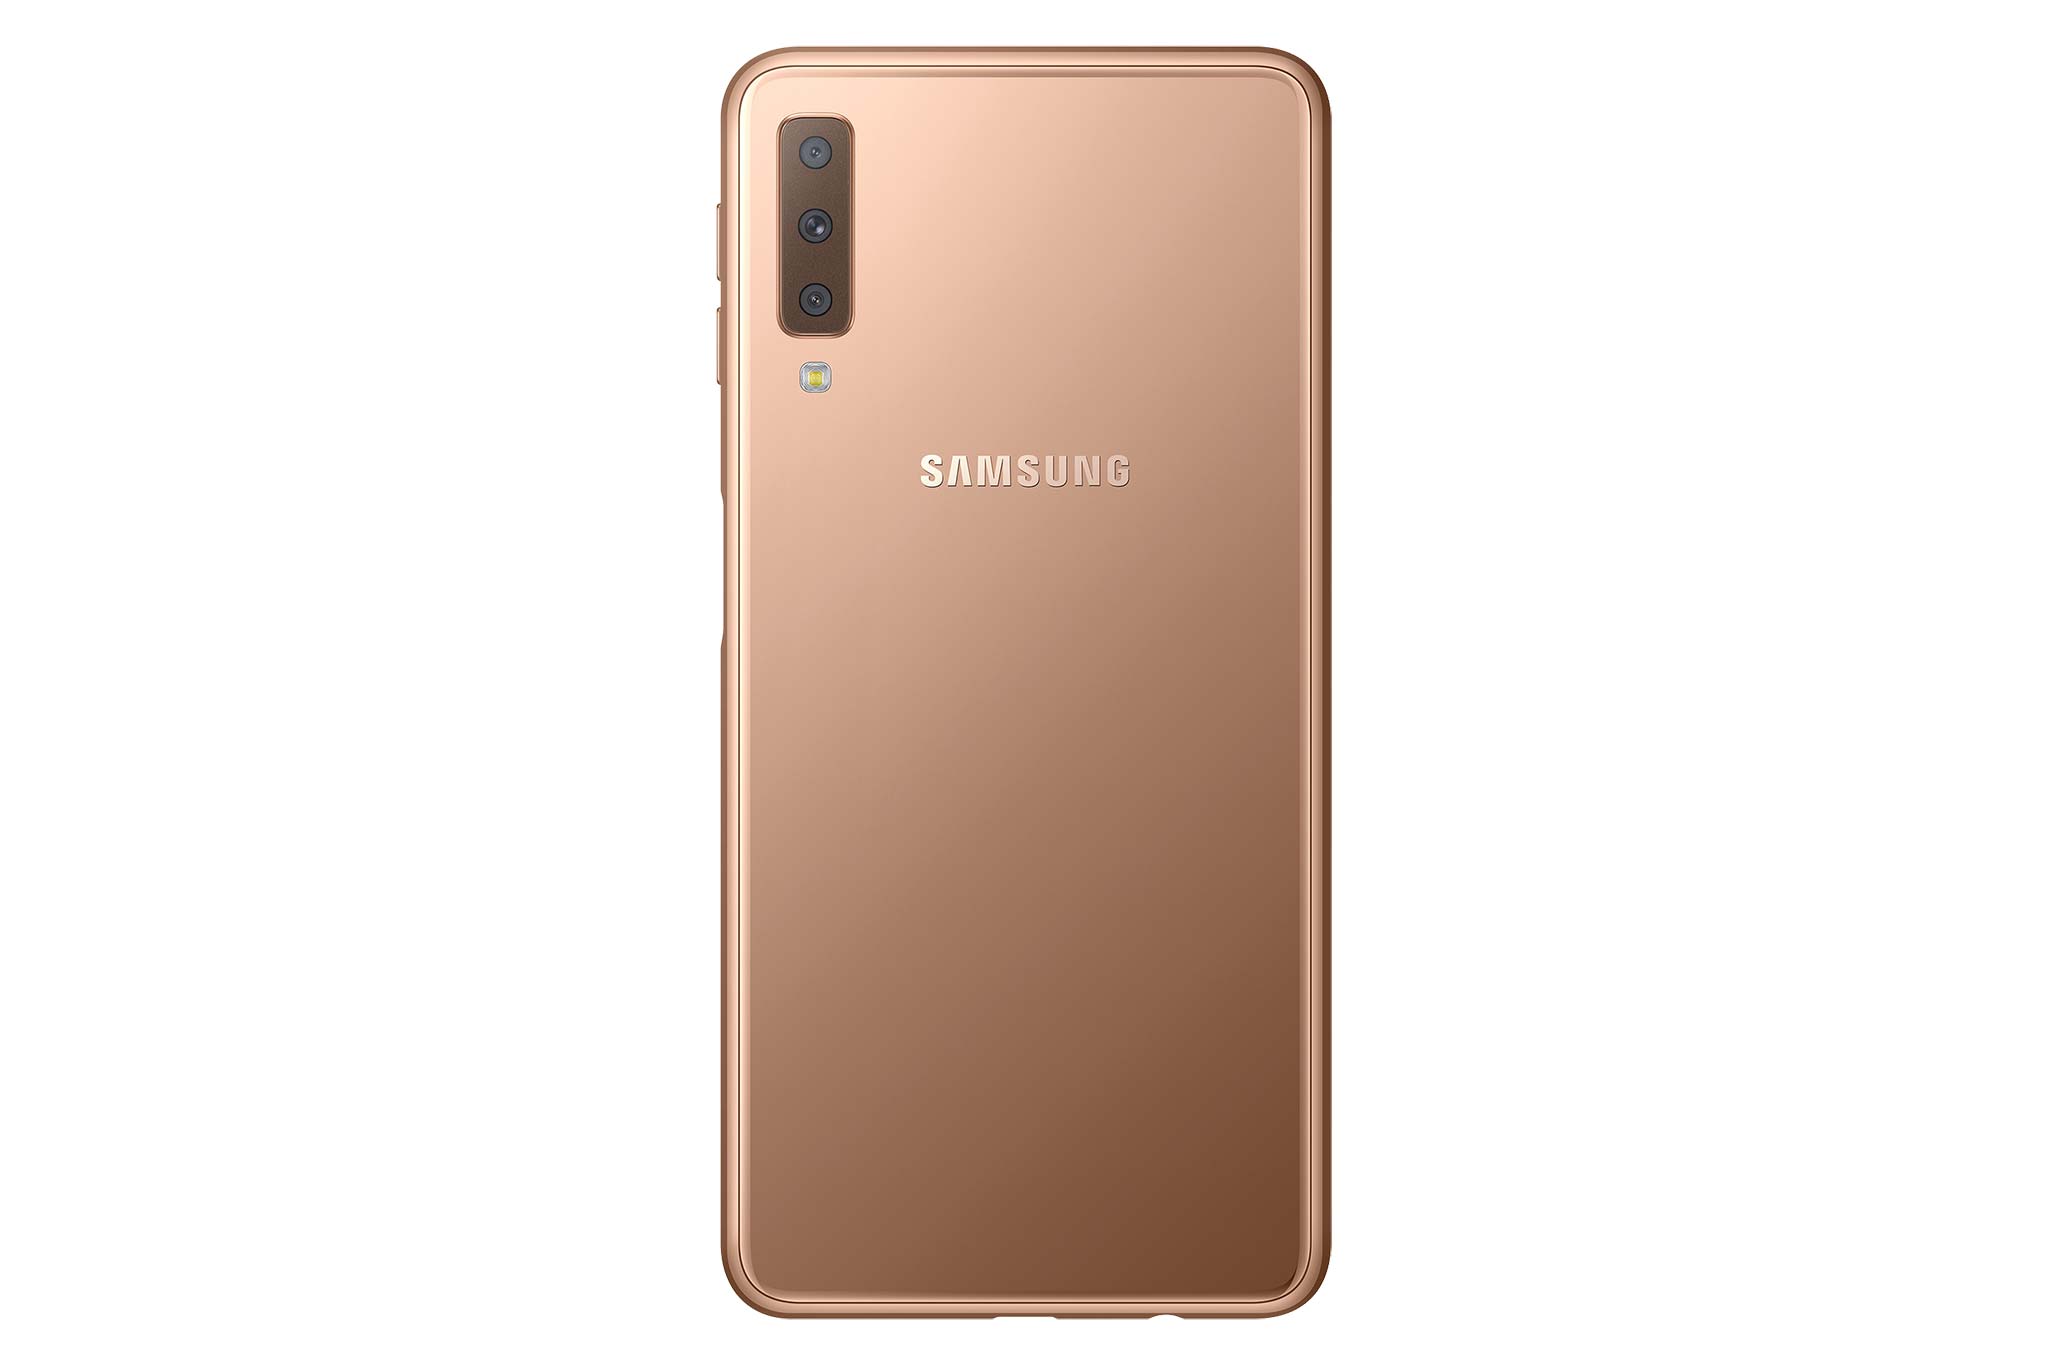 Samsung_Galaxy_A7_2018_2019_tinhte_2.jpg